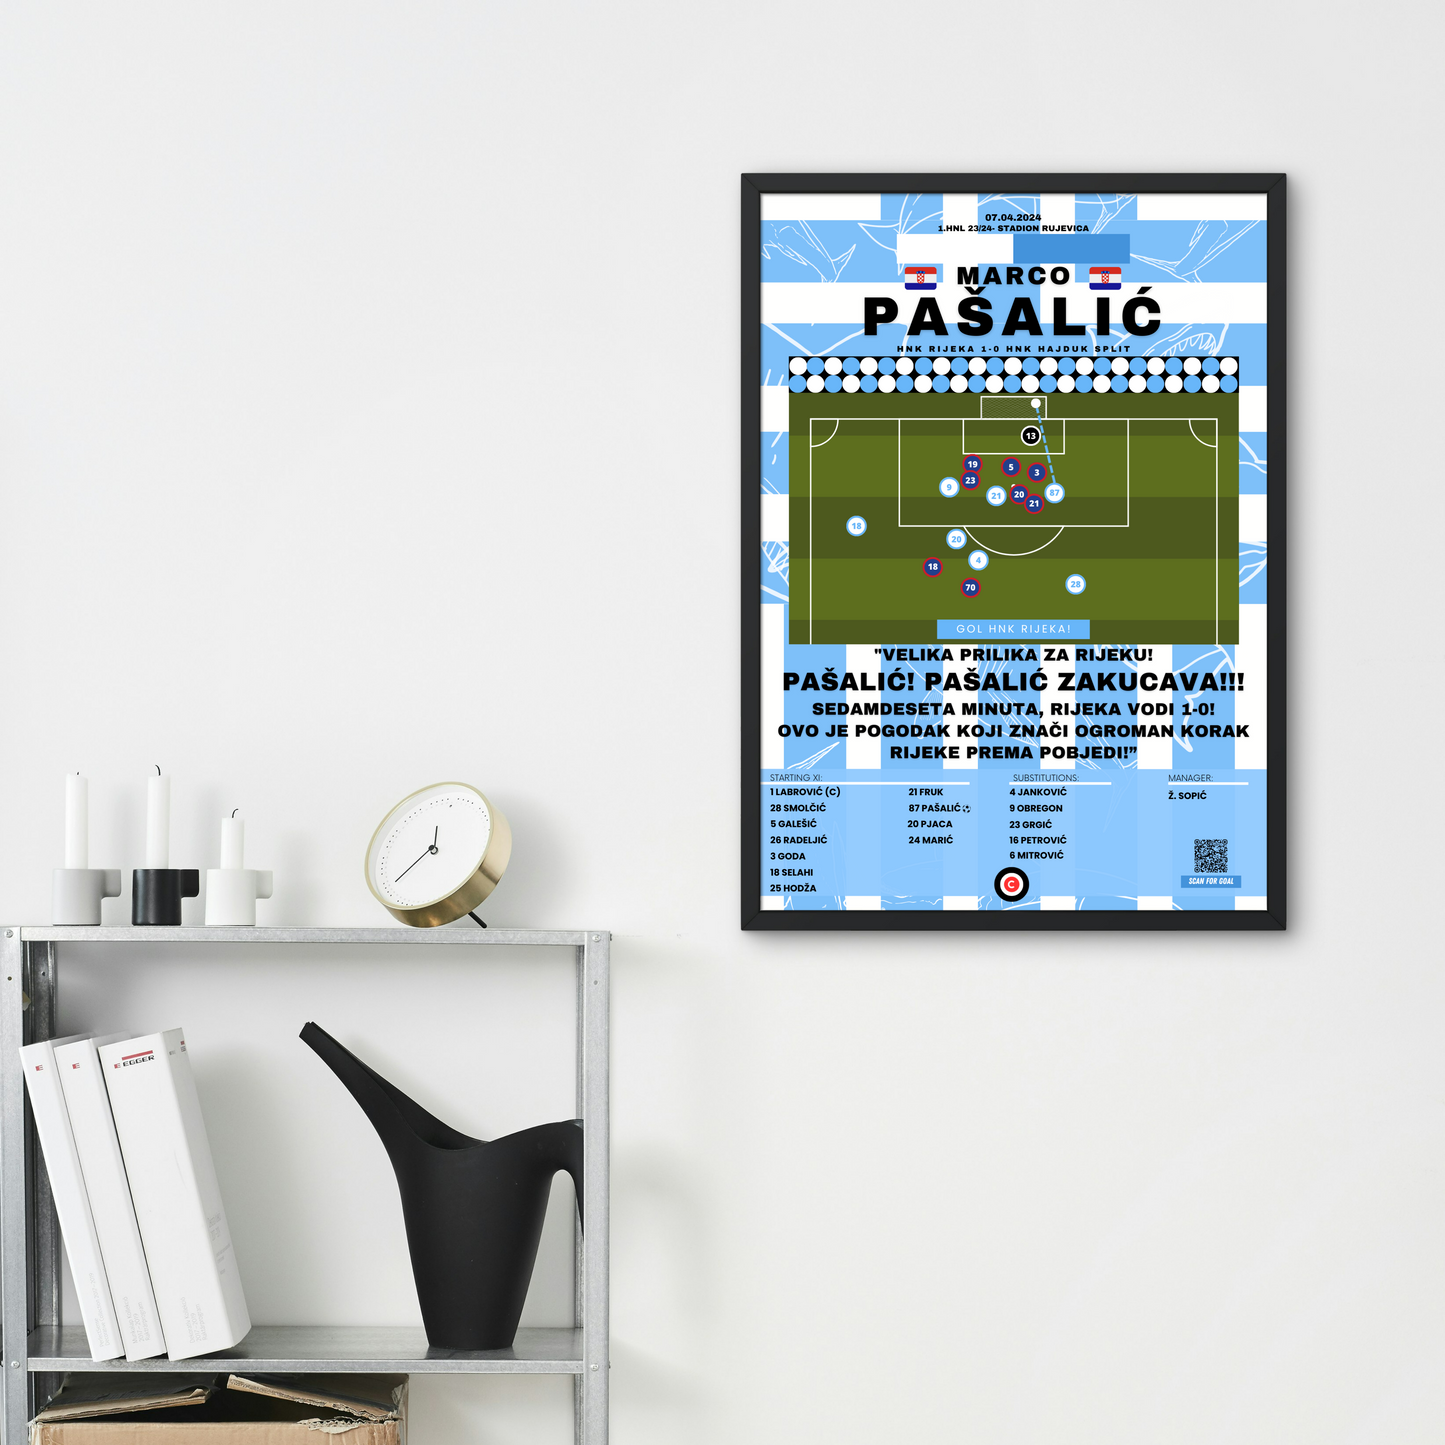 Marco Pašalić gegen Hajduk Split – 1.HNL 23/24 – HNK Rijeka